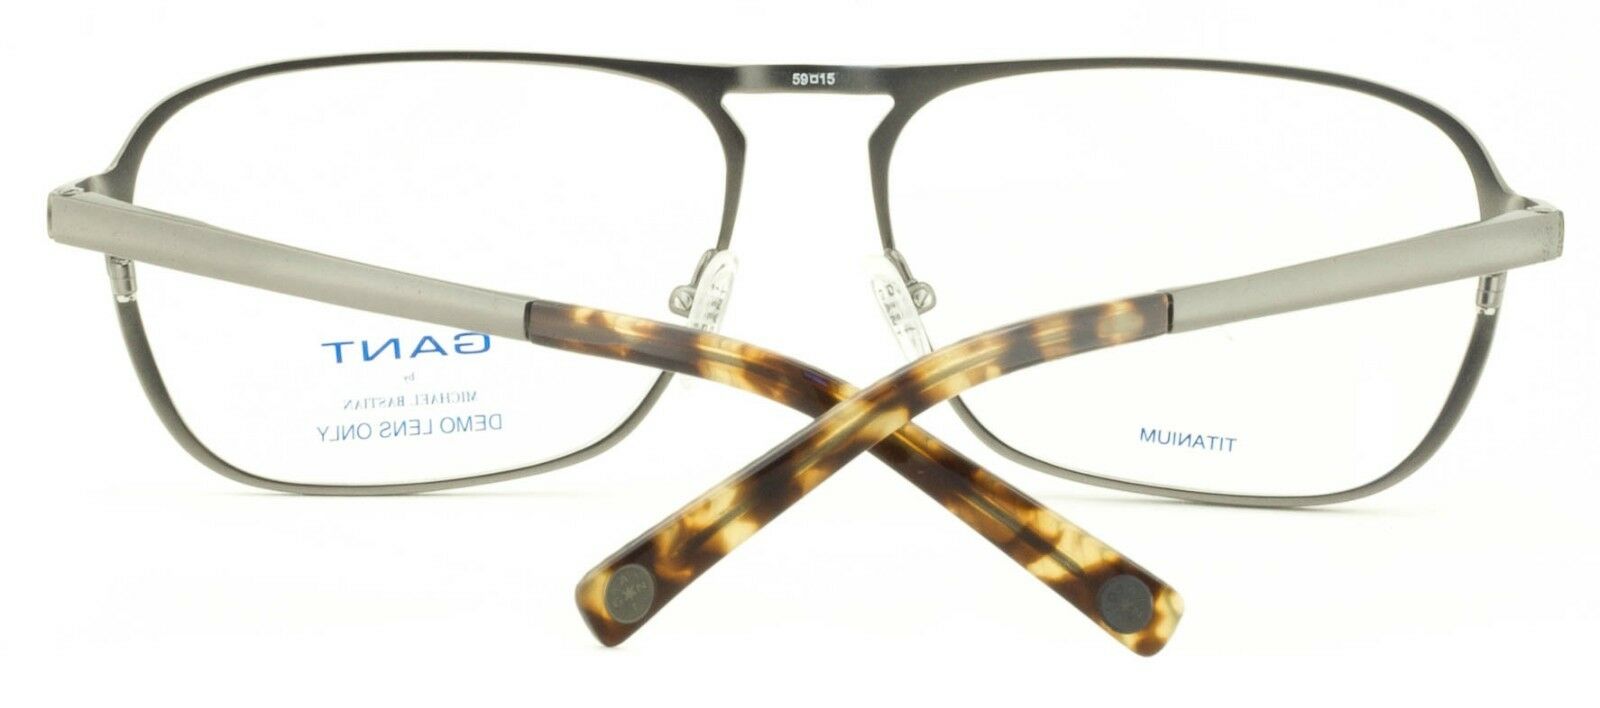 GANT G MB THIN SGUN 0511 7A RX Optical Eyewear FRAMES Glasses Eyeglasses - New